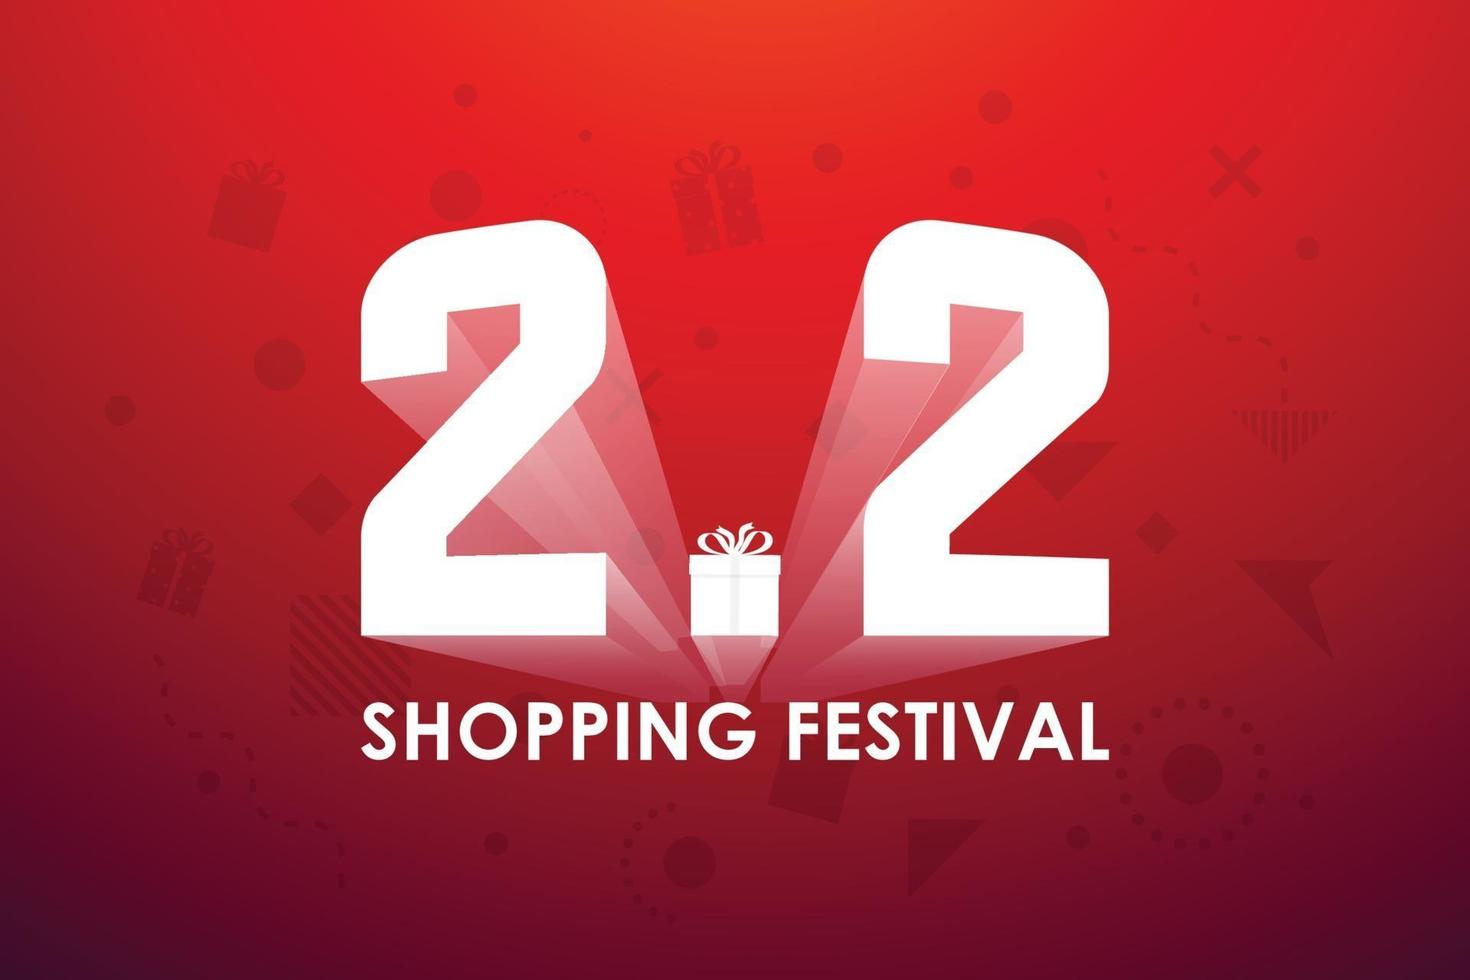 2.2 shopping festival, toespraak marketing bannerontwerp op rode achtergrond. vector illustratie